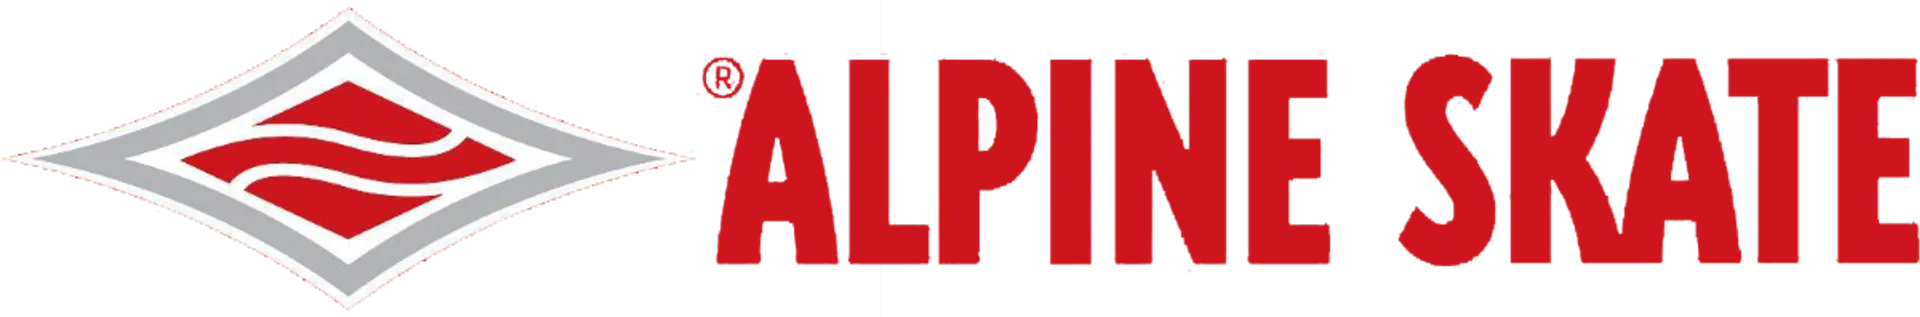 ALPINE SKATE logo